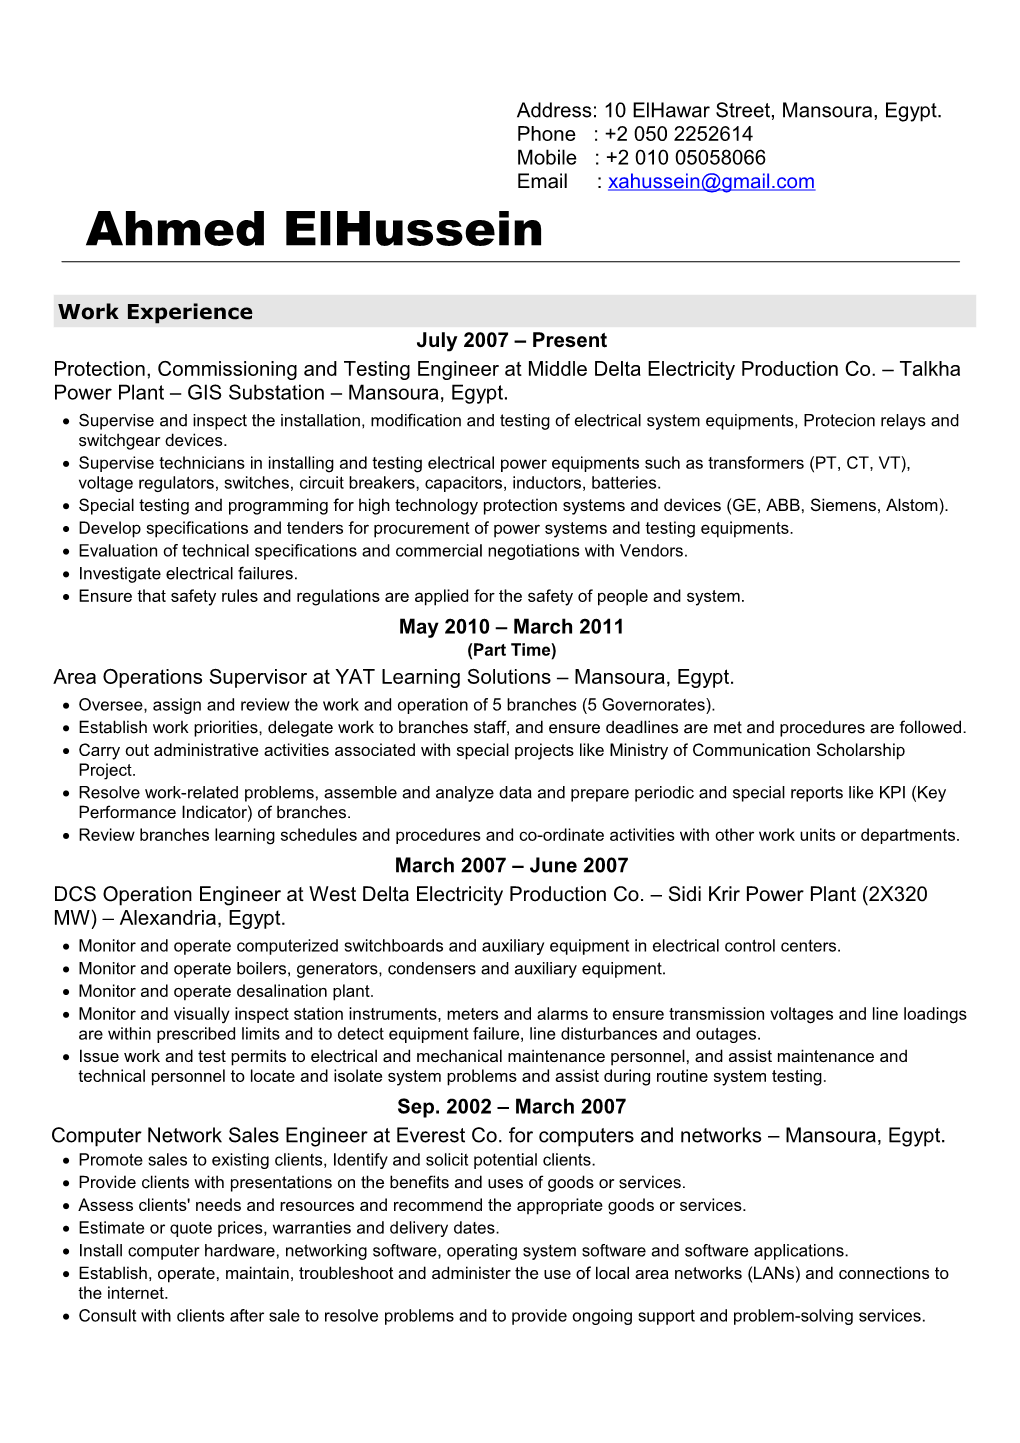 Ahmed Elhussein